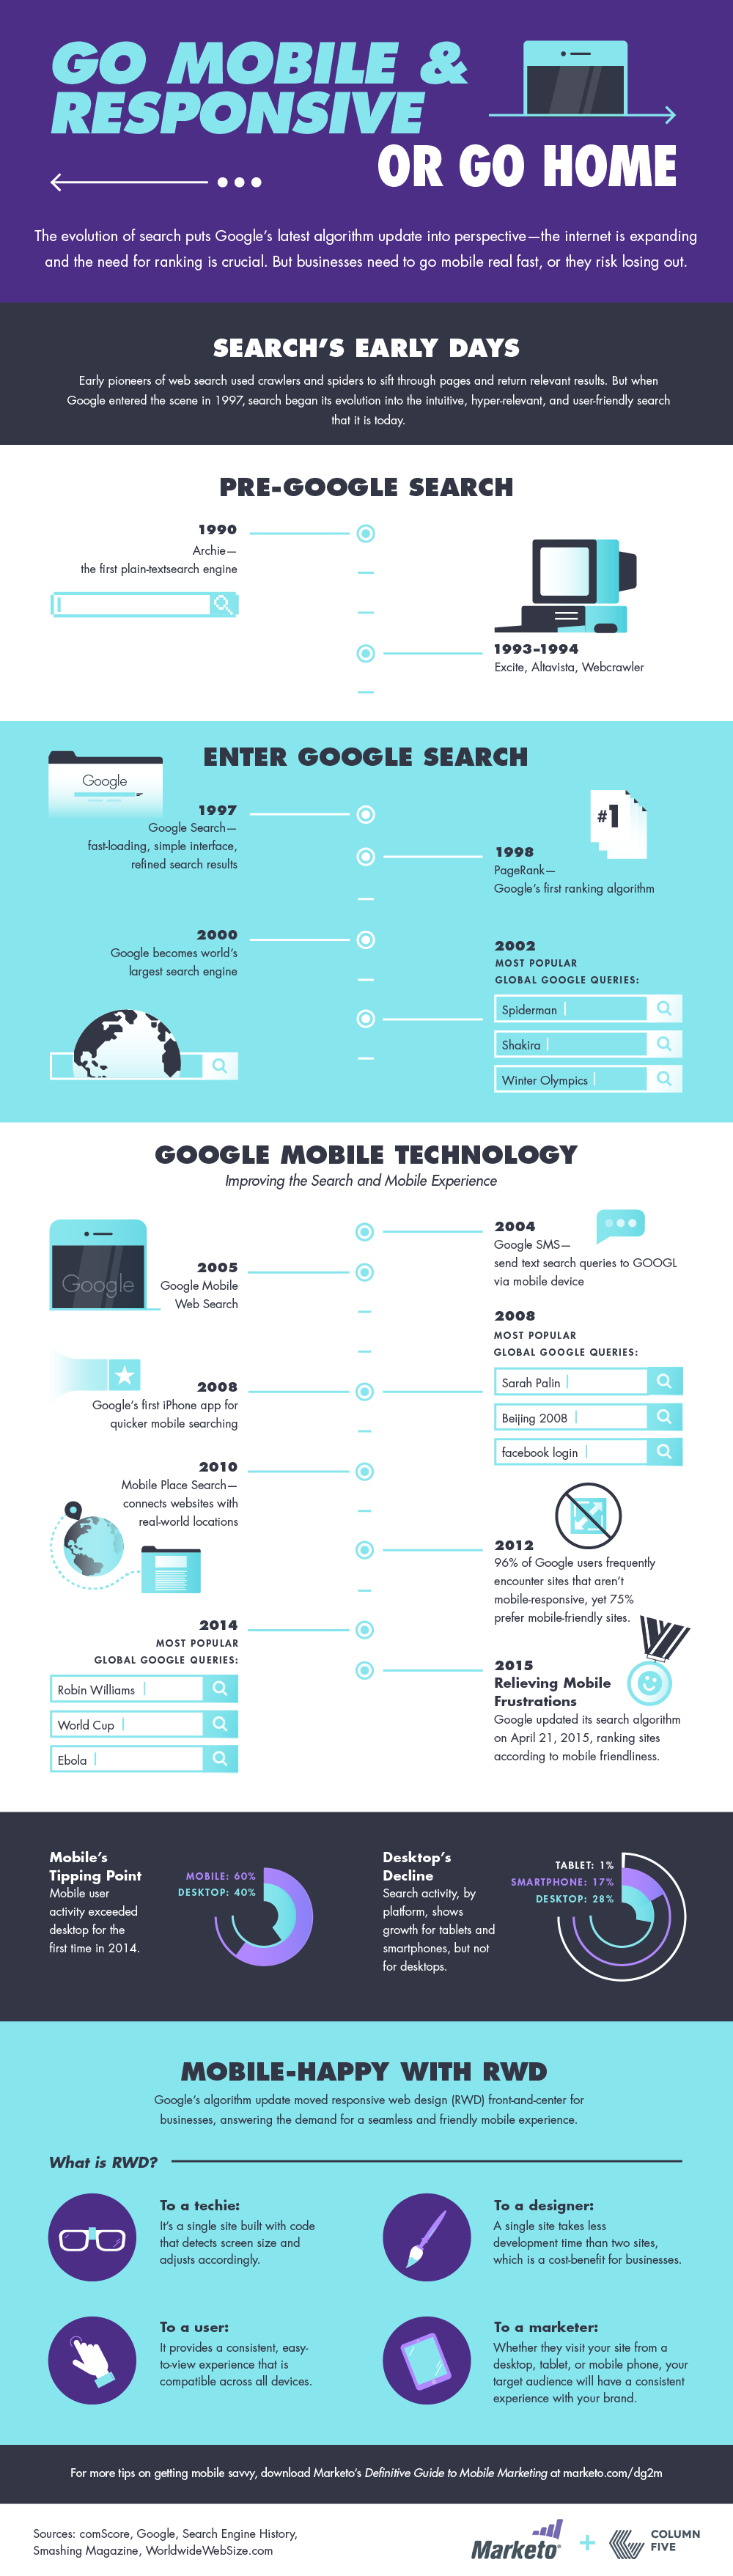 Infographic-Responsive-Mobile-Marketo